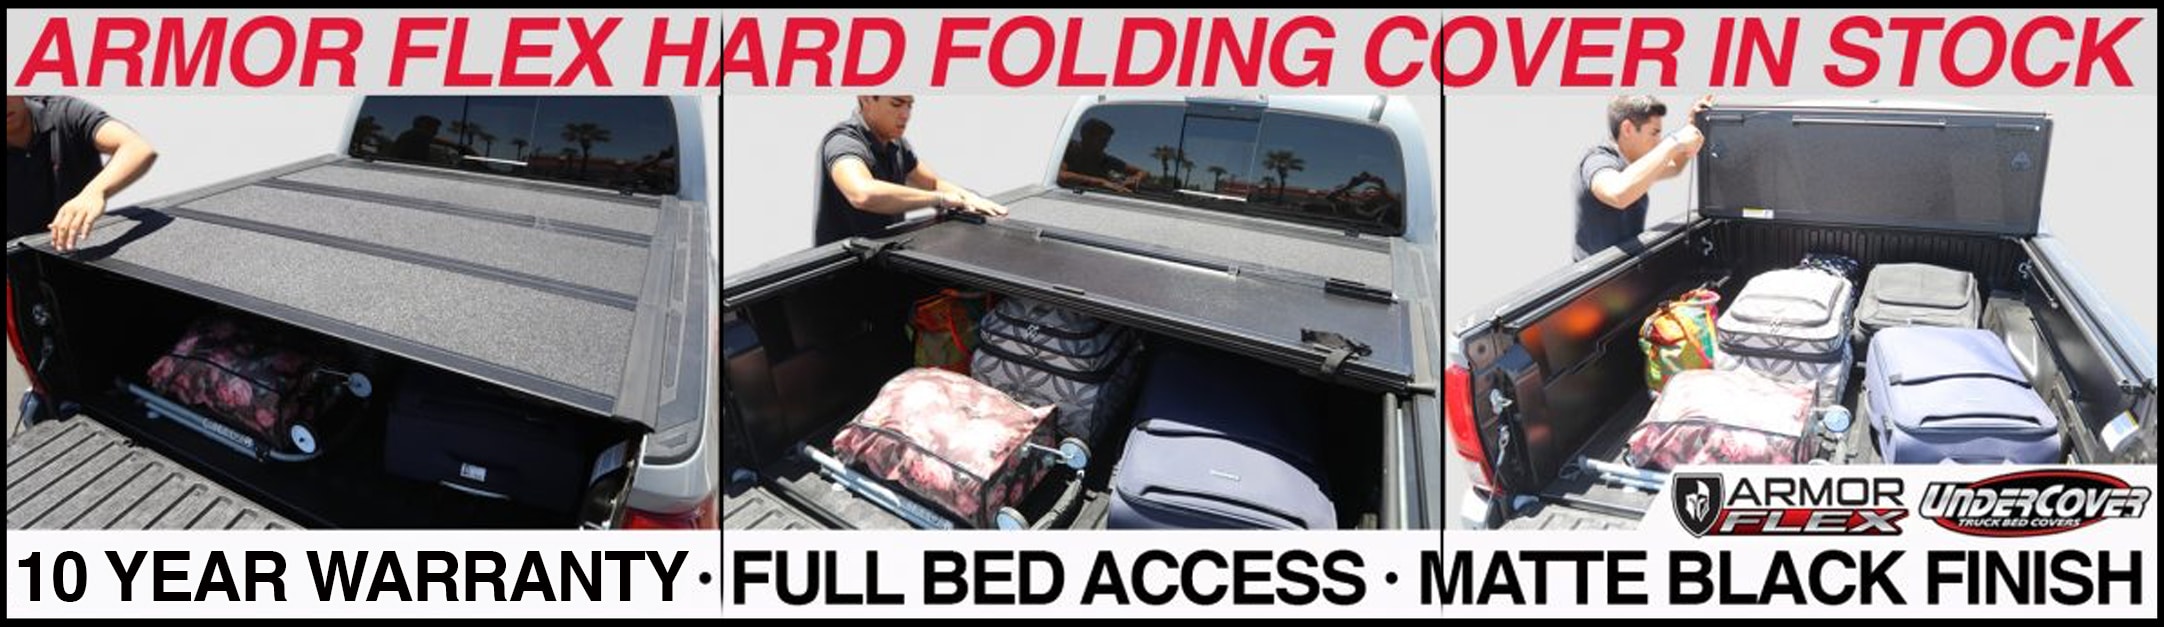 armor flex undercover truck bed cover_az